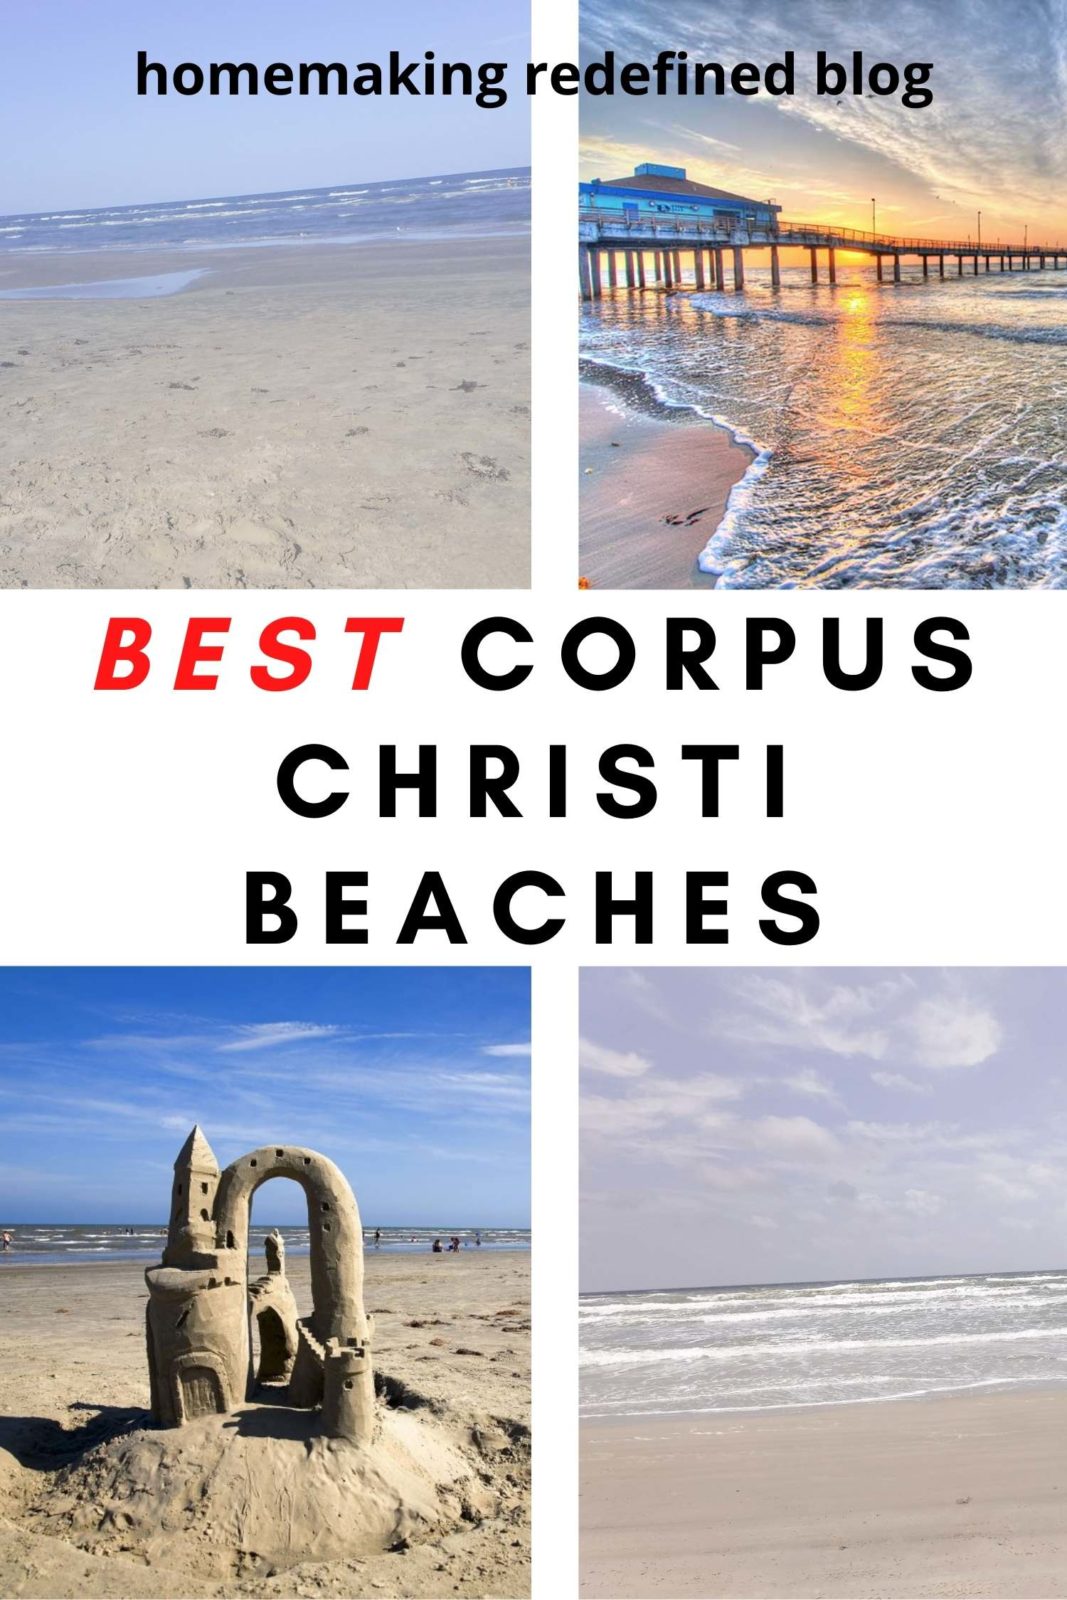 Best Corpus Christi Beaches - Homemaking Redefined